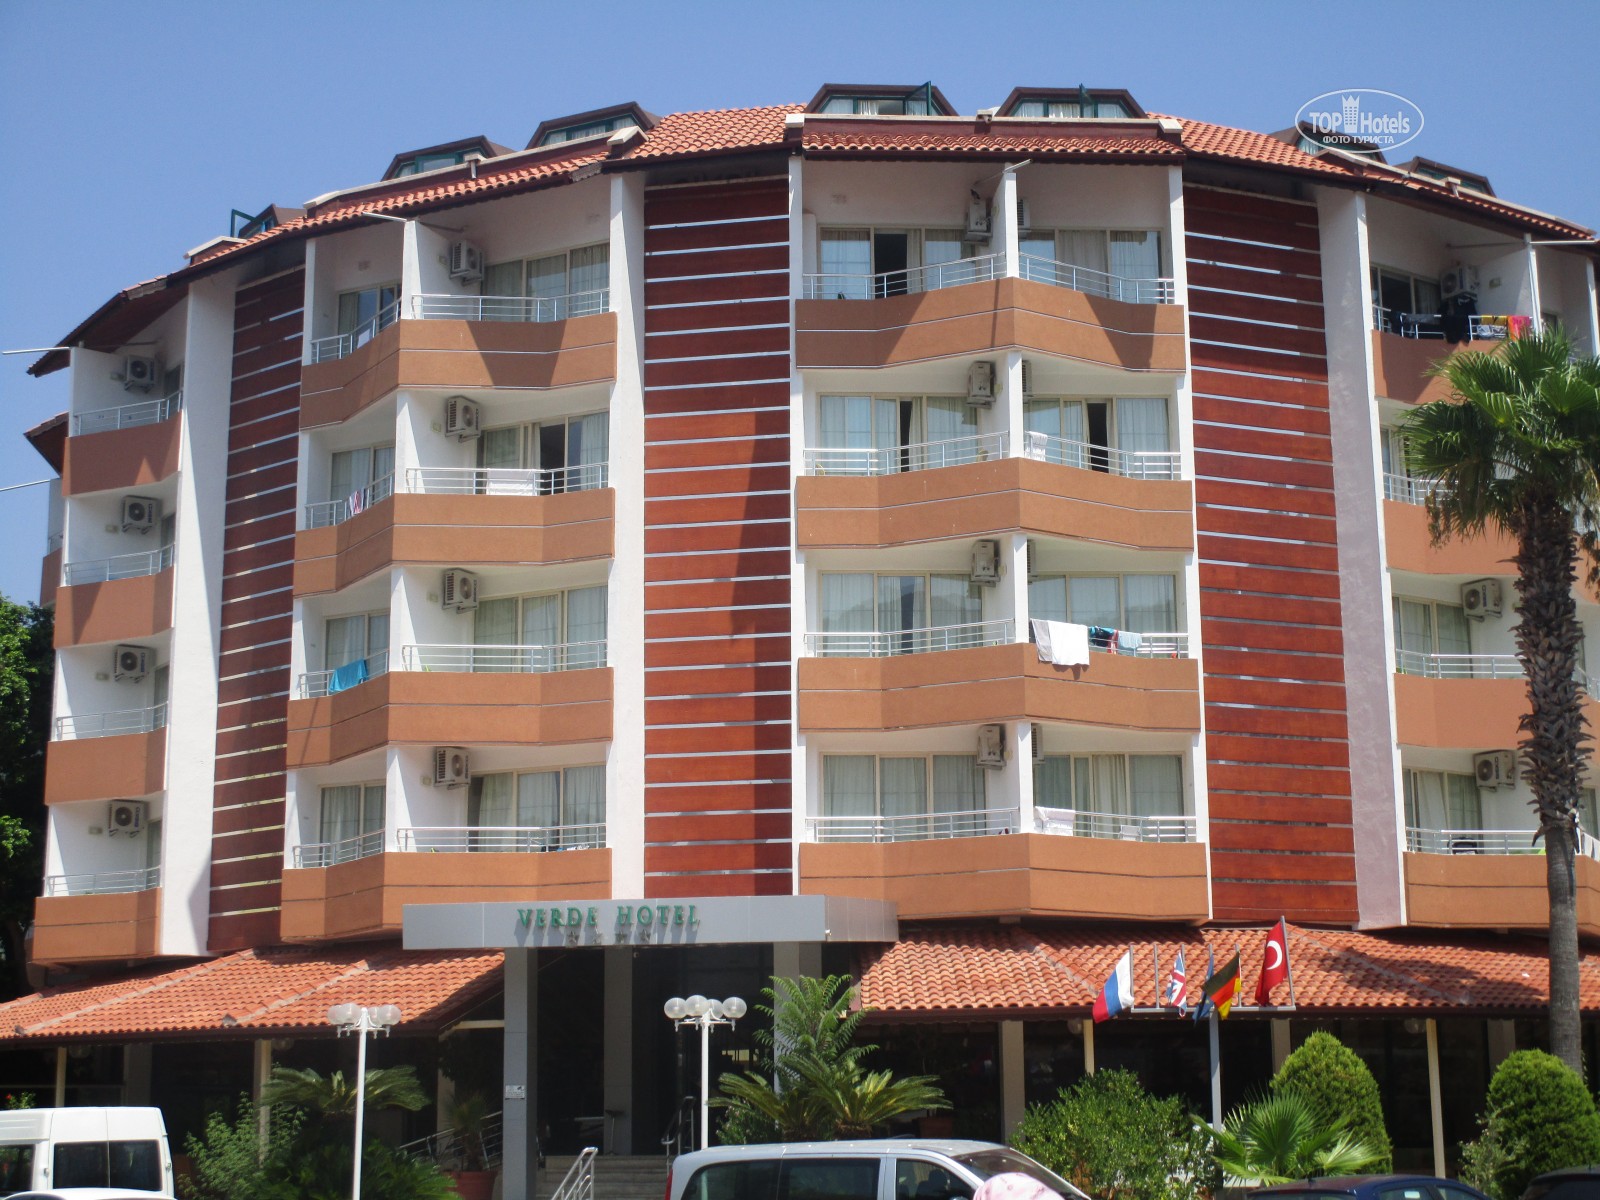 Ceny hoteli Idas Park Hotel (ex. Verde)